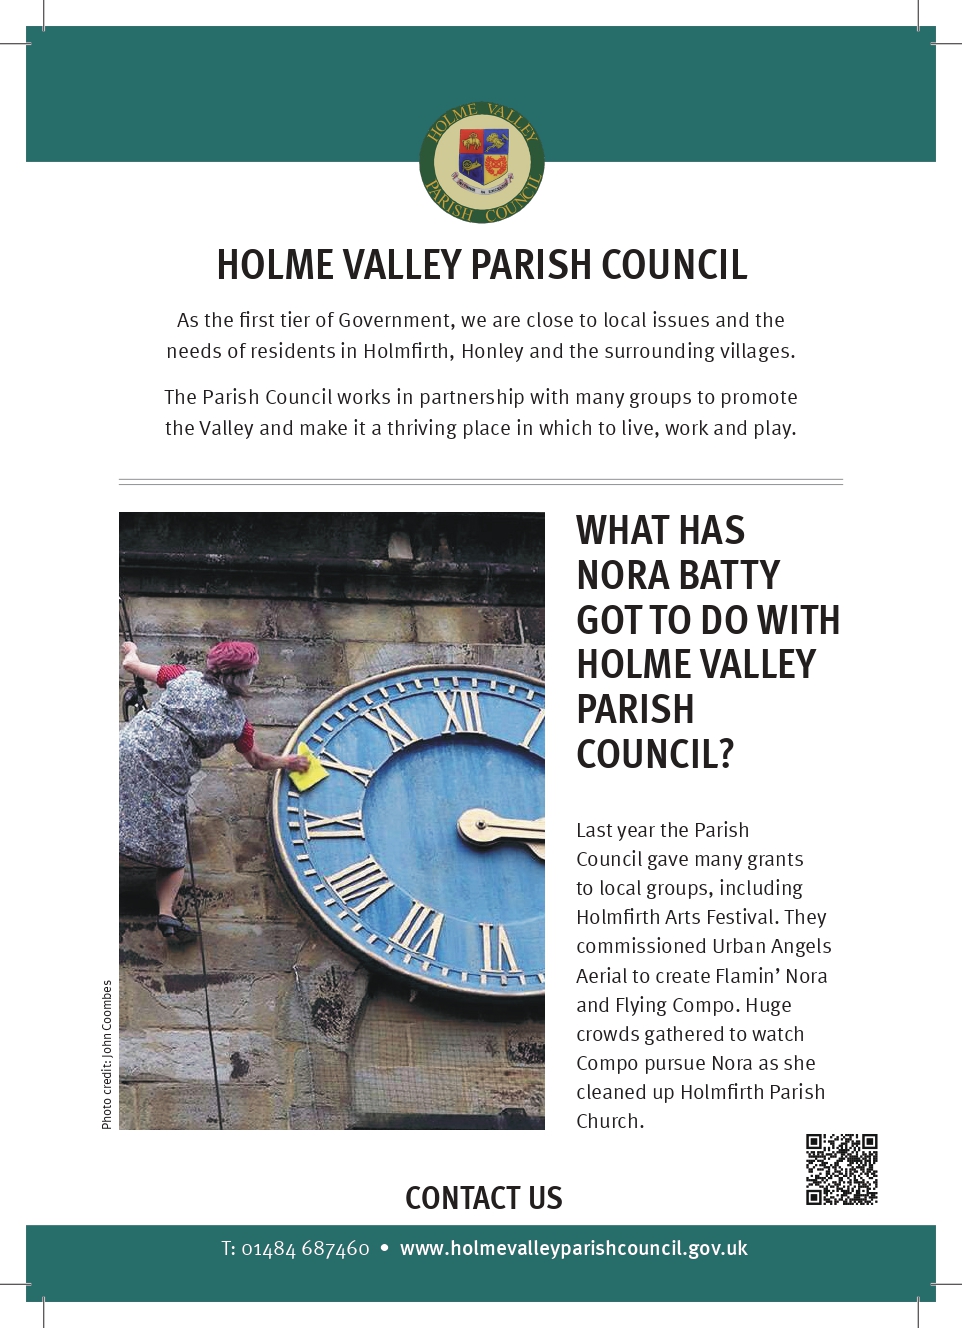 Holme Valley Parish Council - What